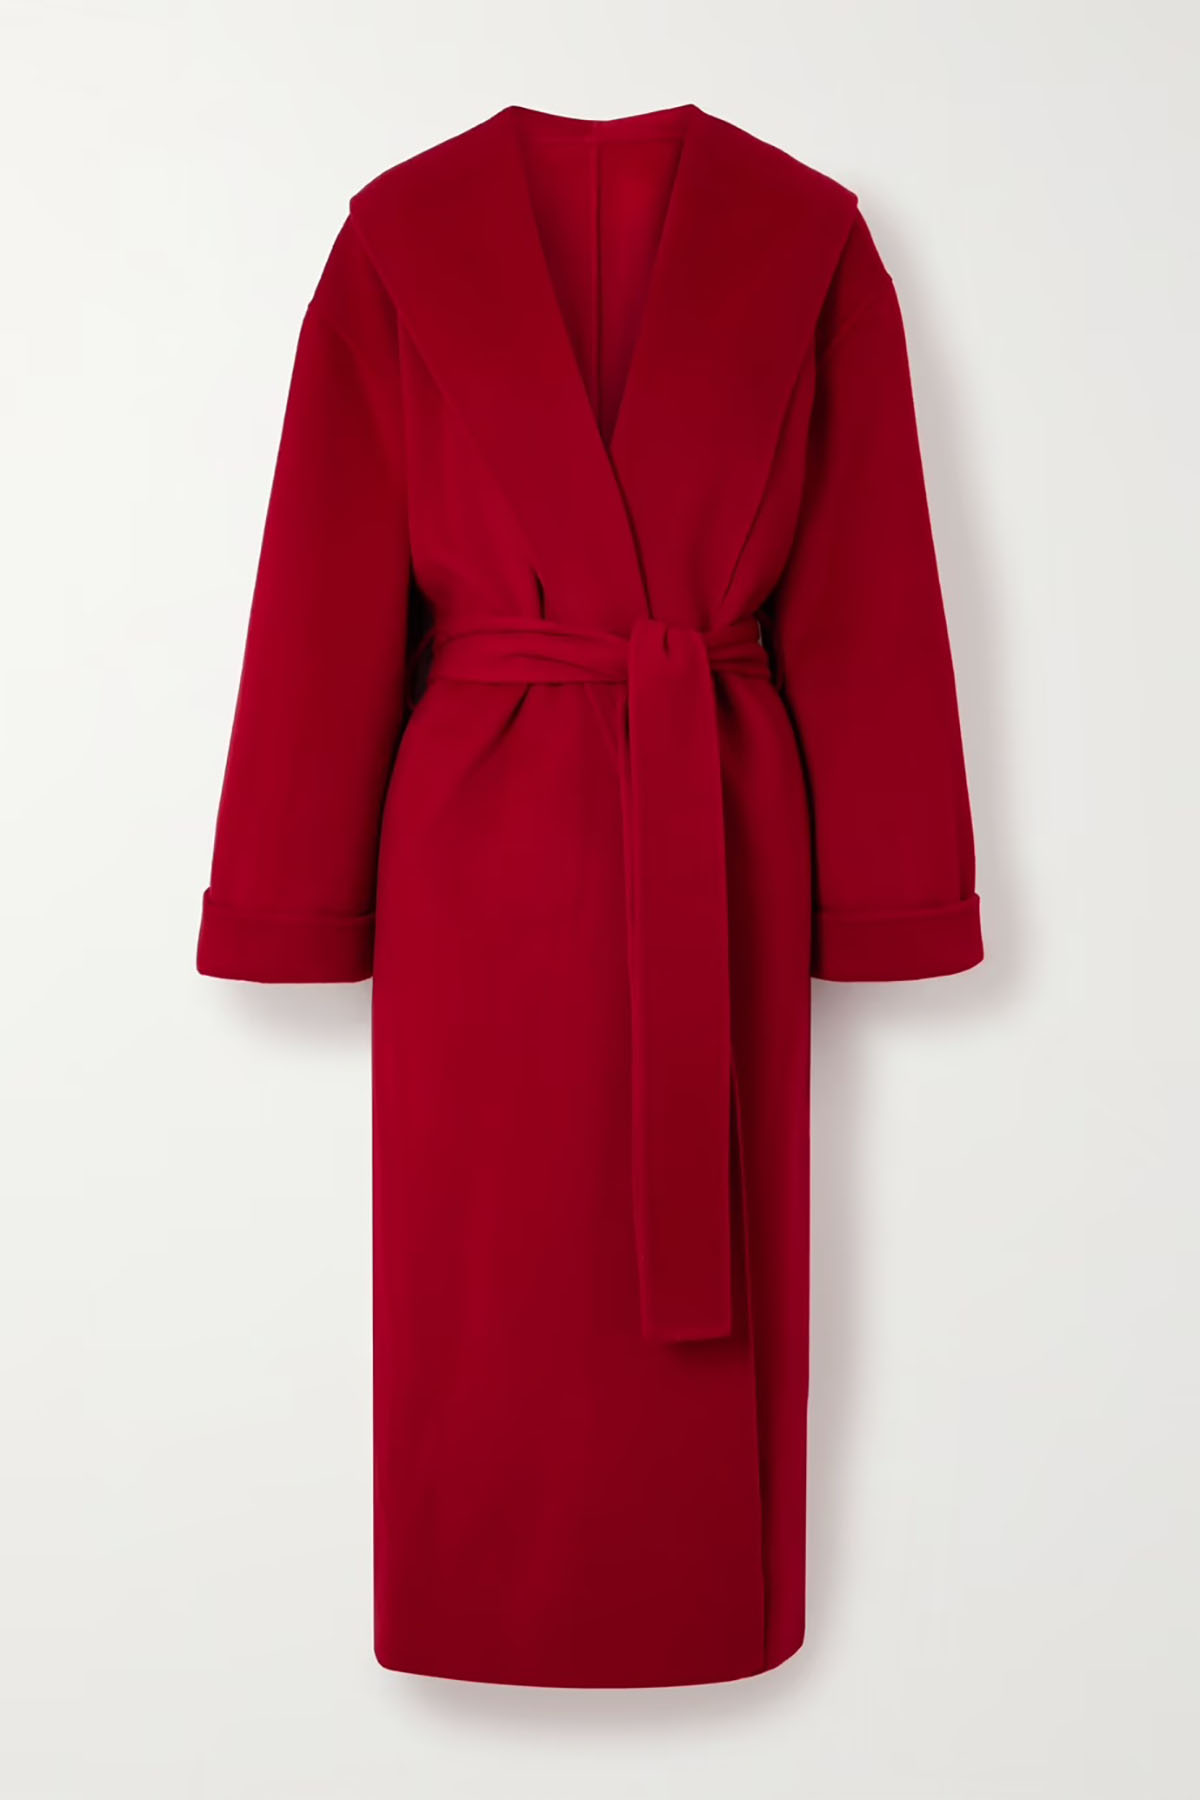 BY-MALENE-BIRGER-red-coat